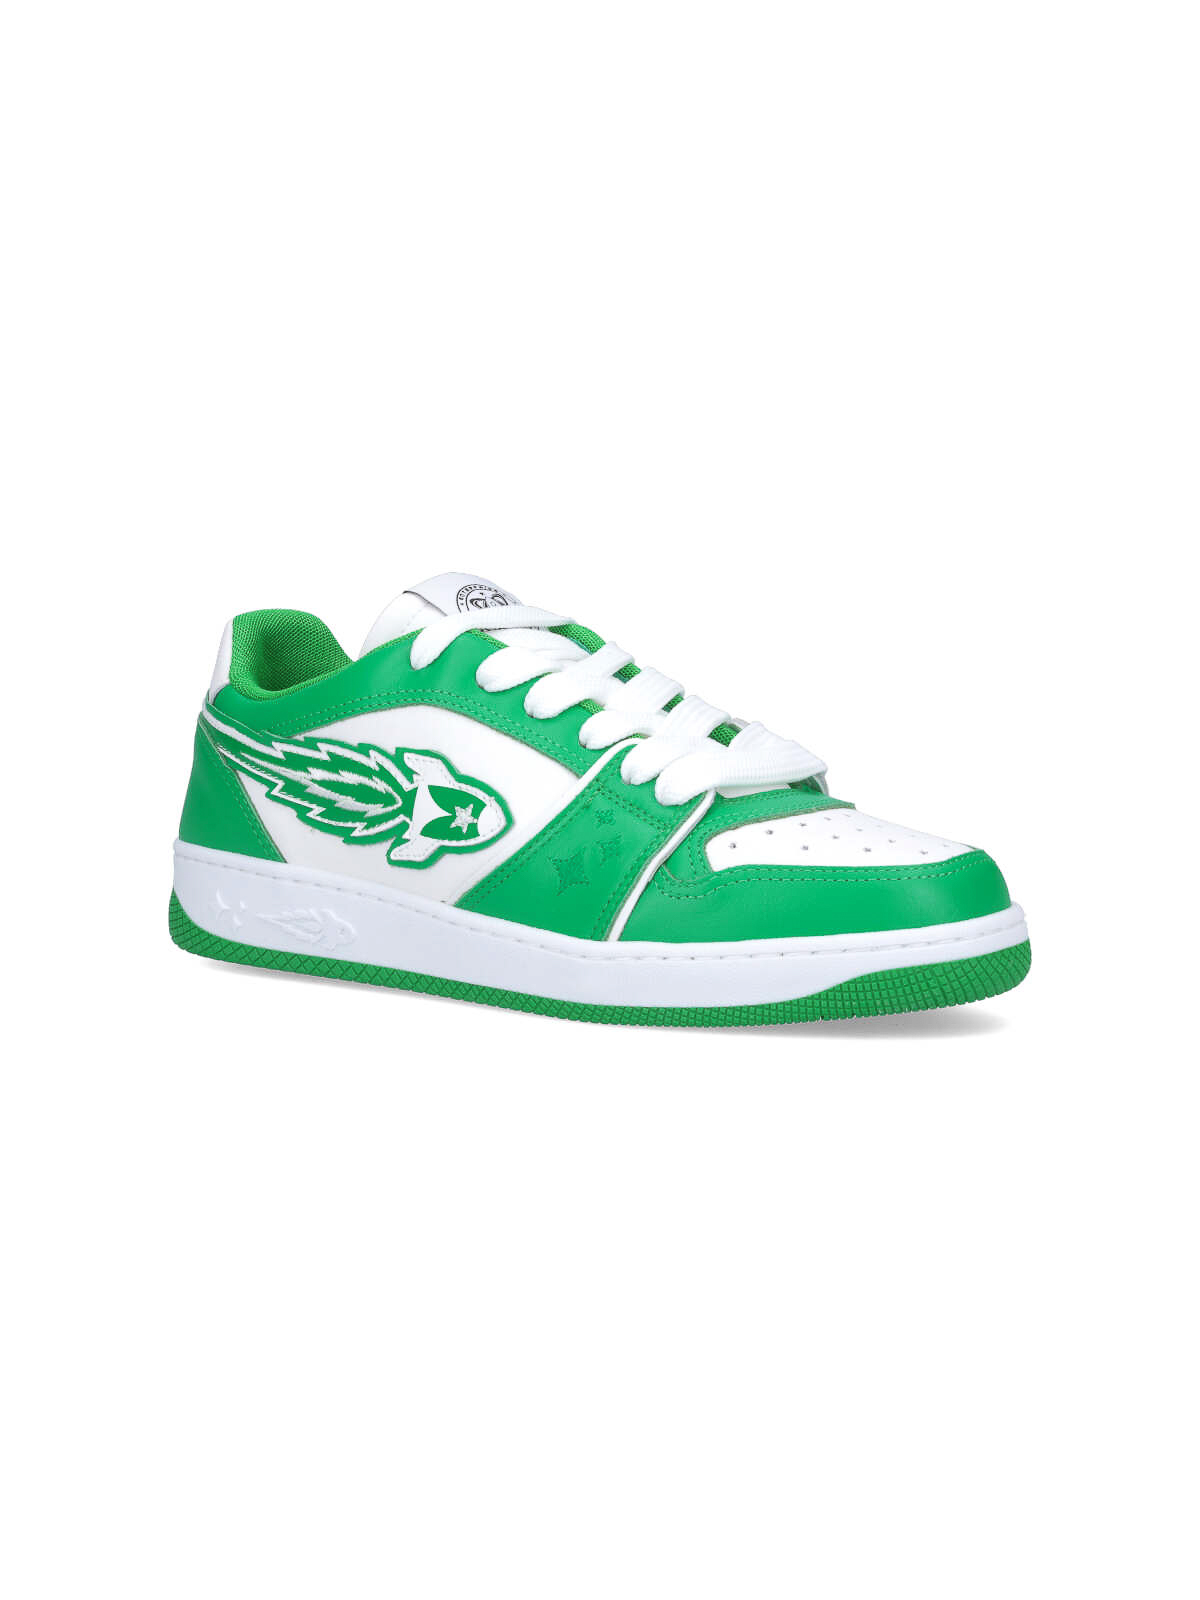 Shop Enterprise Japan Sneakers Green